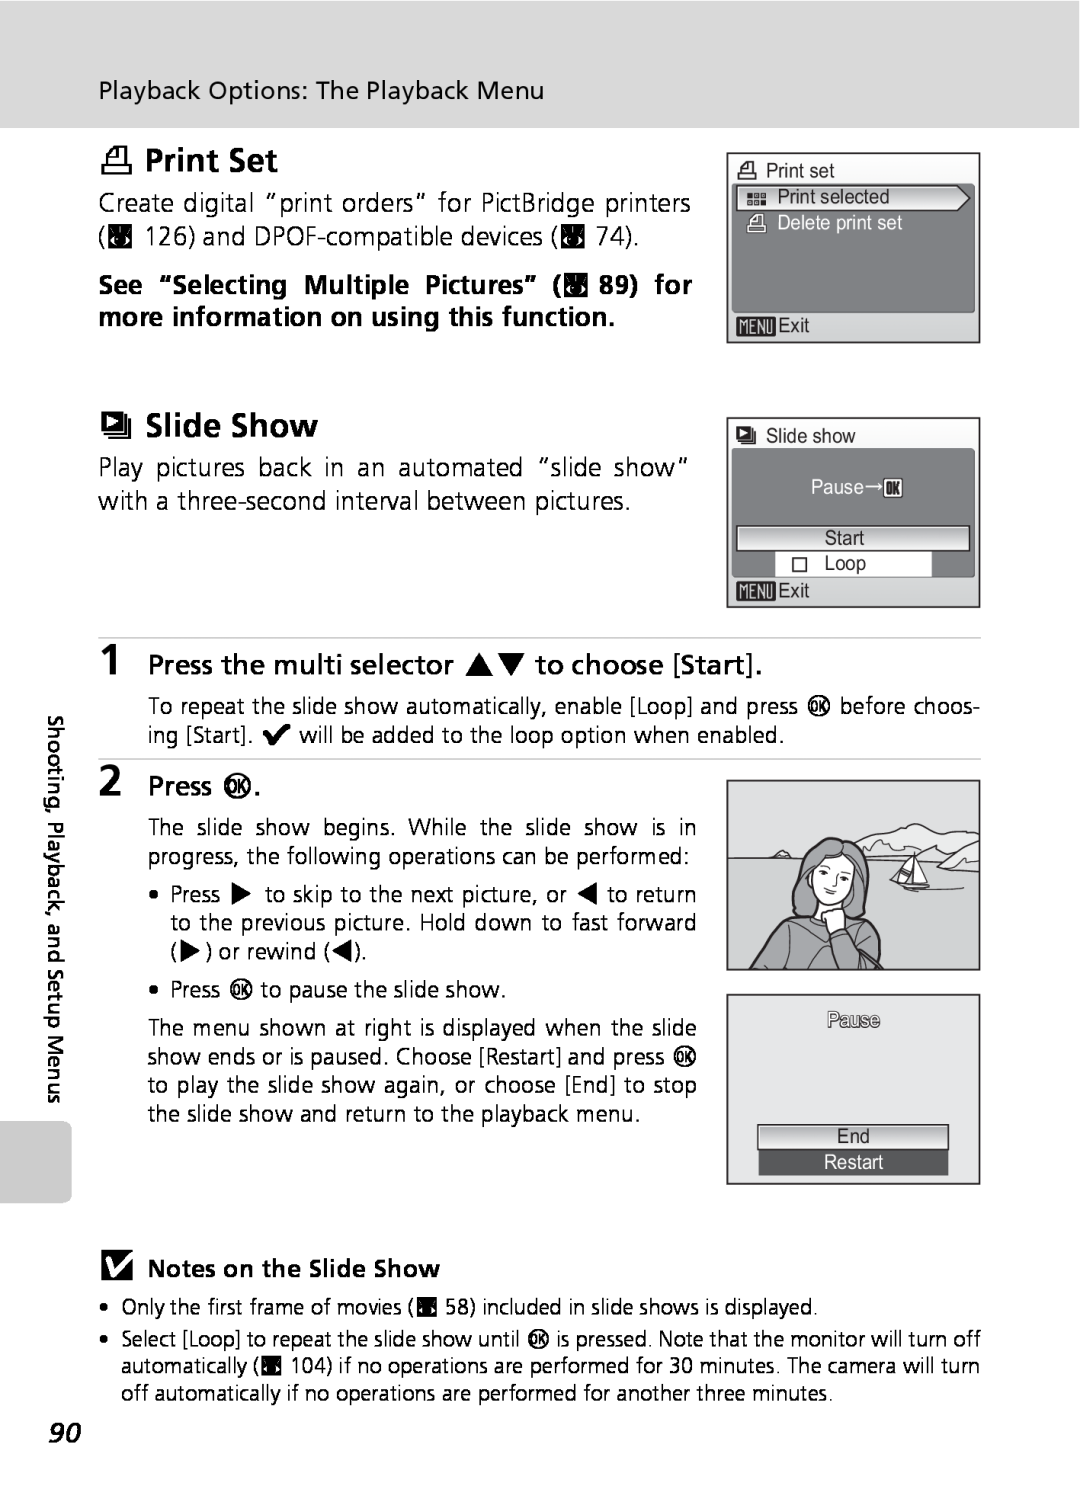 Nikon S9 manual w Print Set, z Slide Show, Press the multi selector GH to choose Start, Press d, jNotes on the Slide Show 